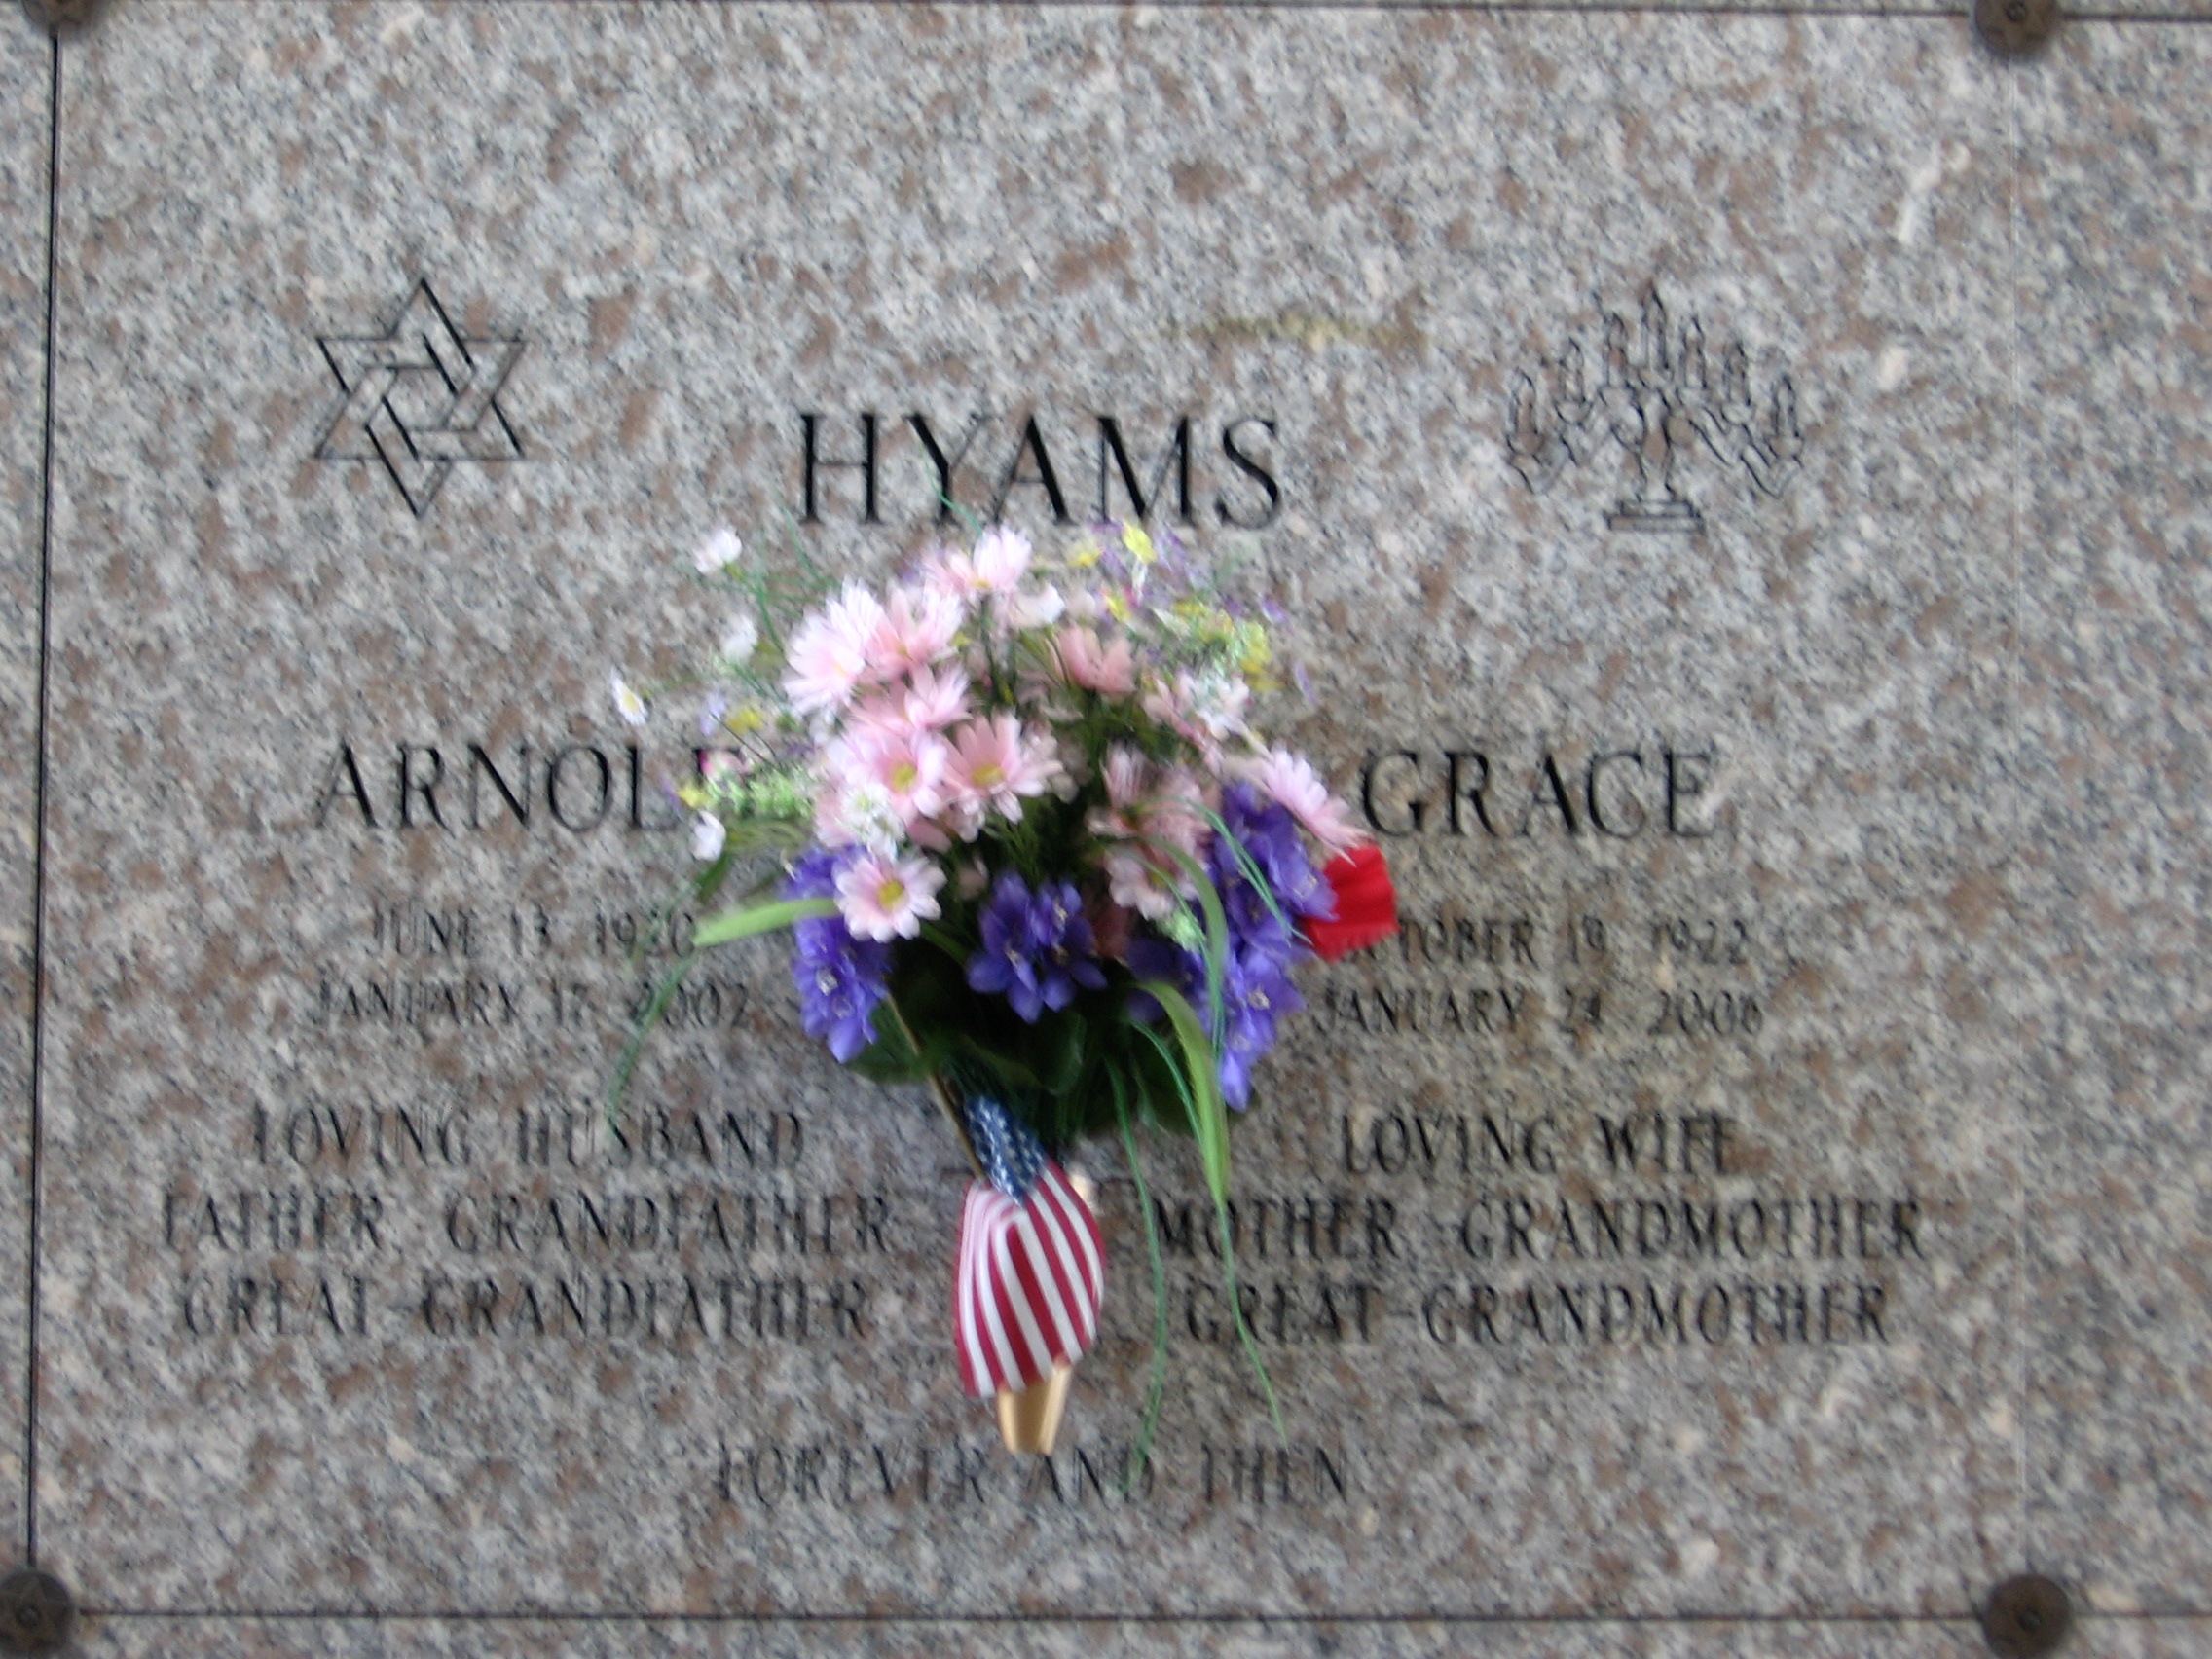 Arnold Hyams